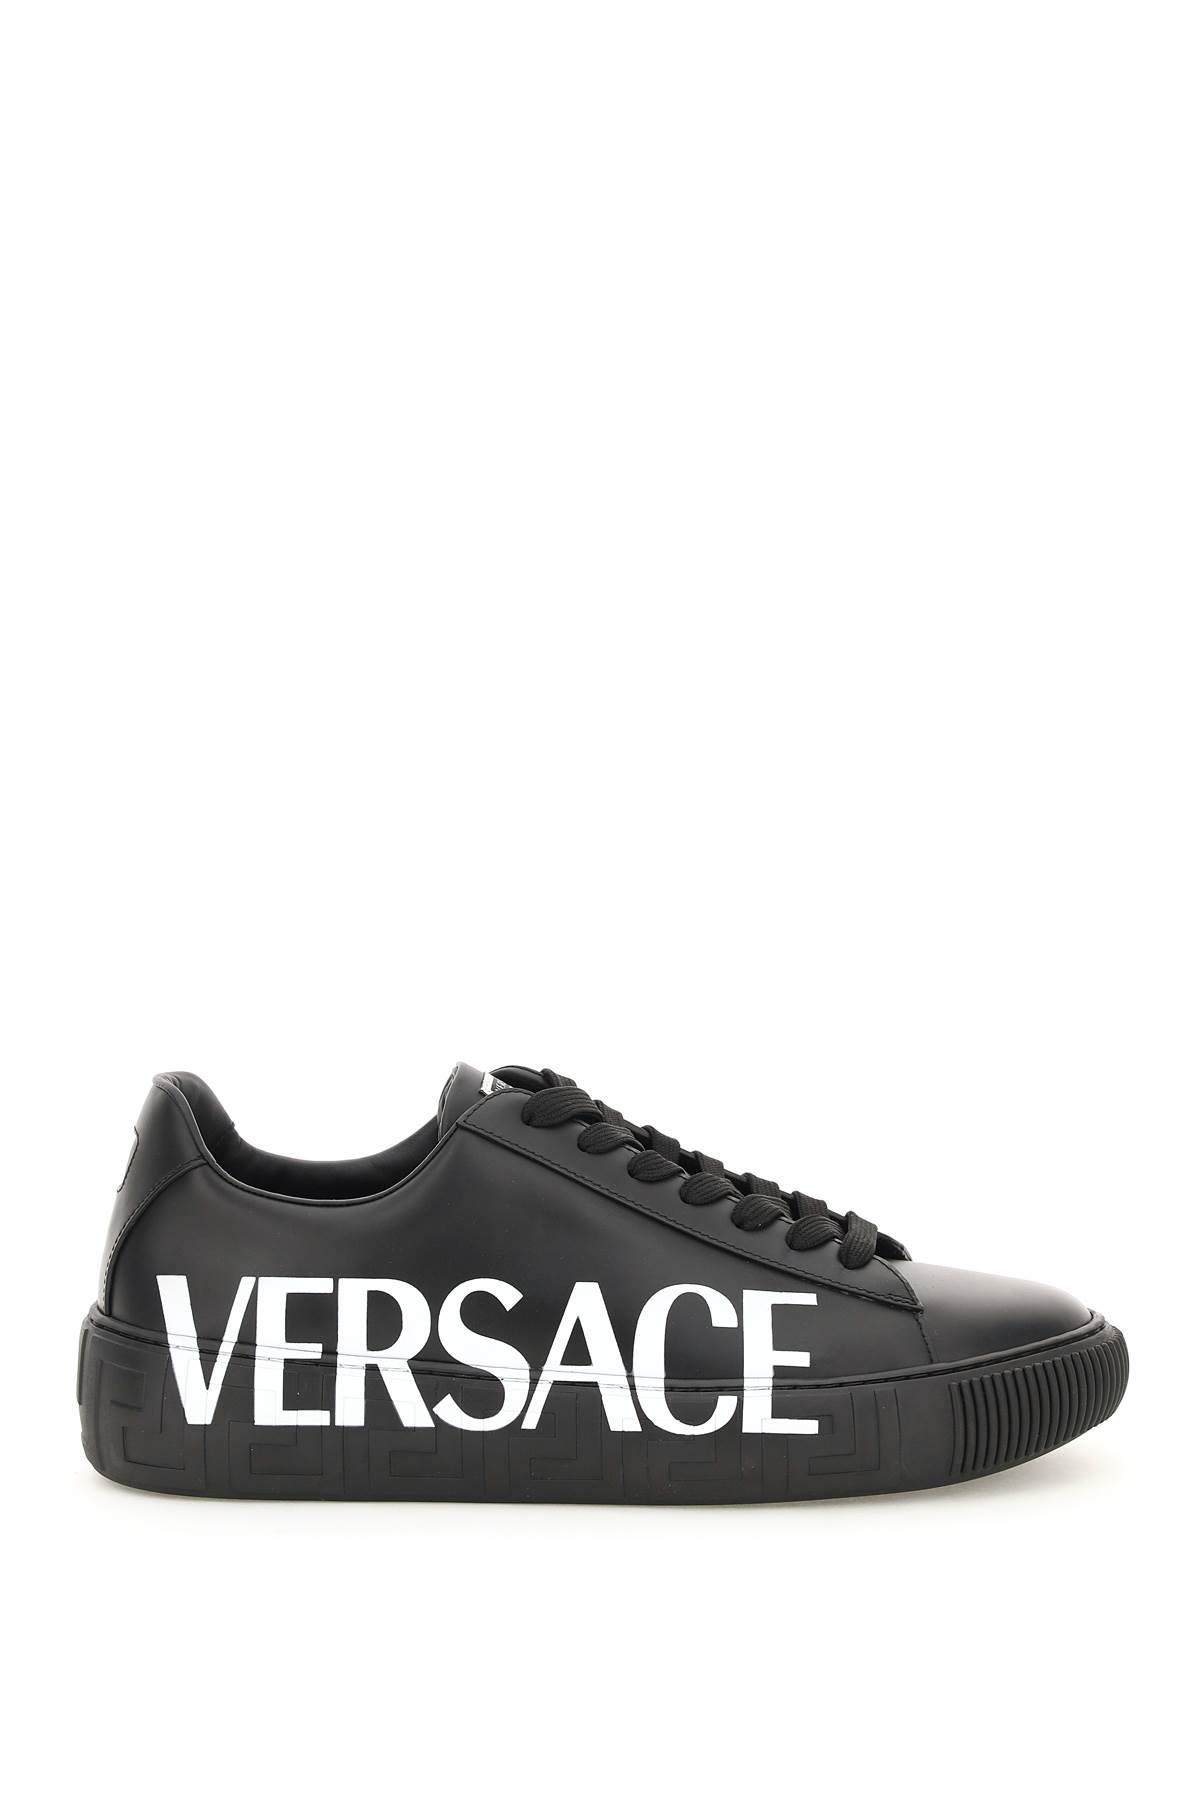 Versace Leather Greca Sneakers